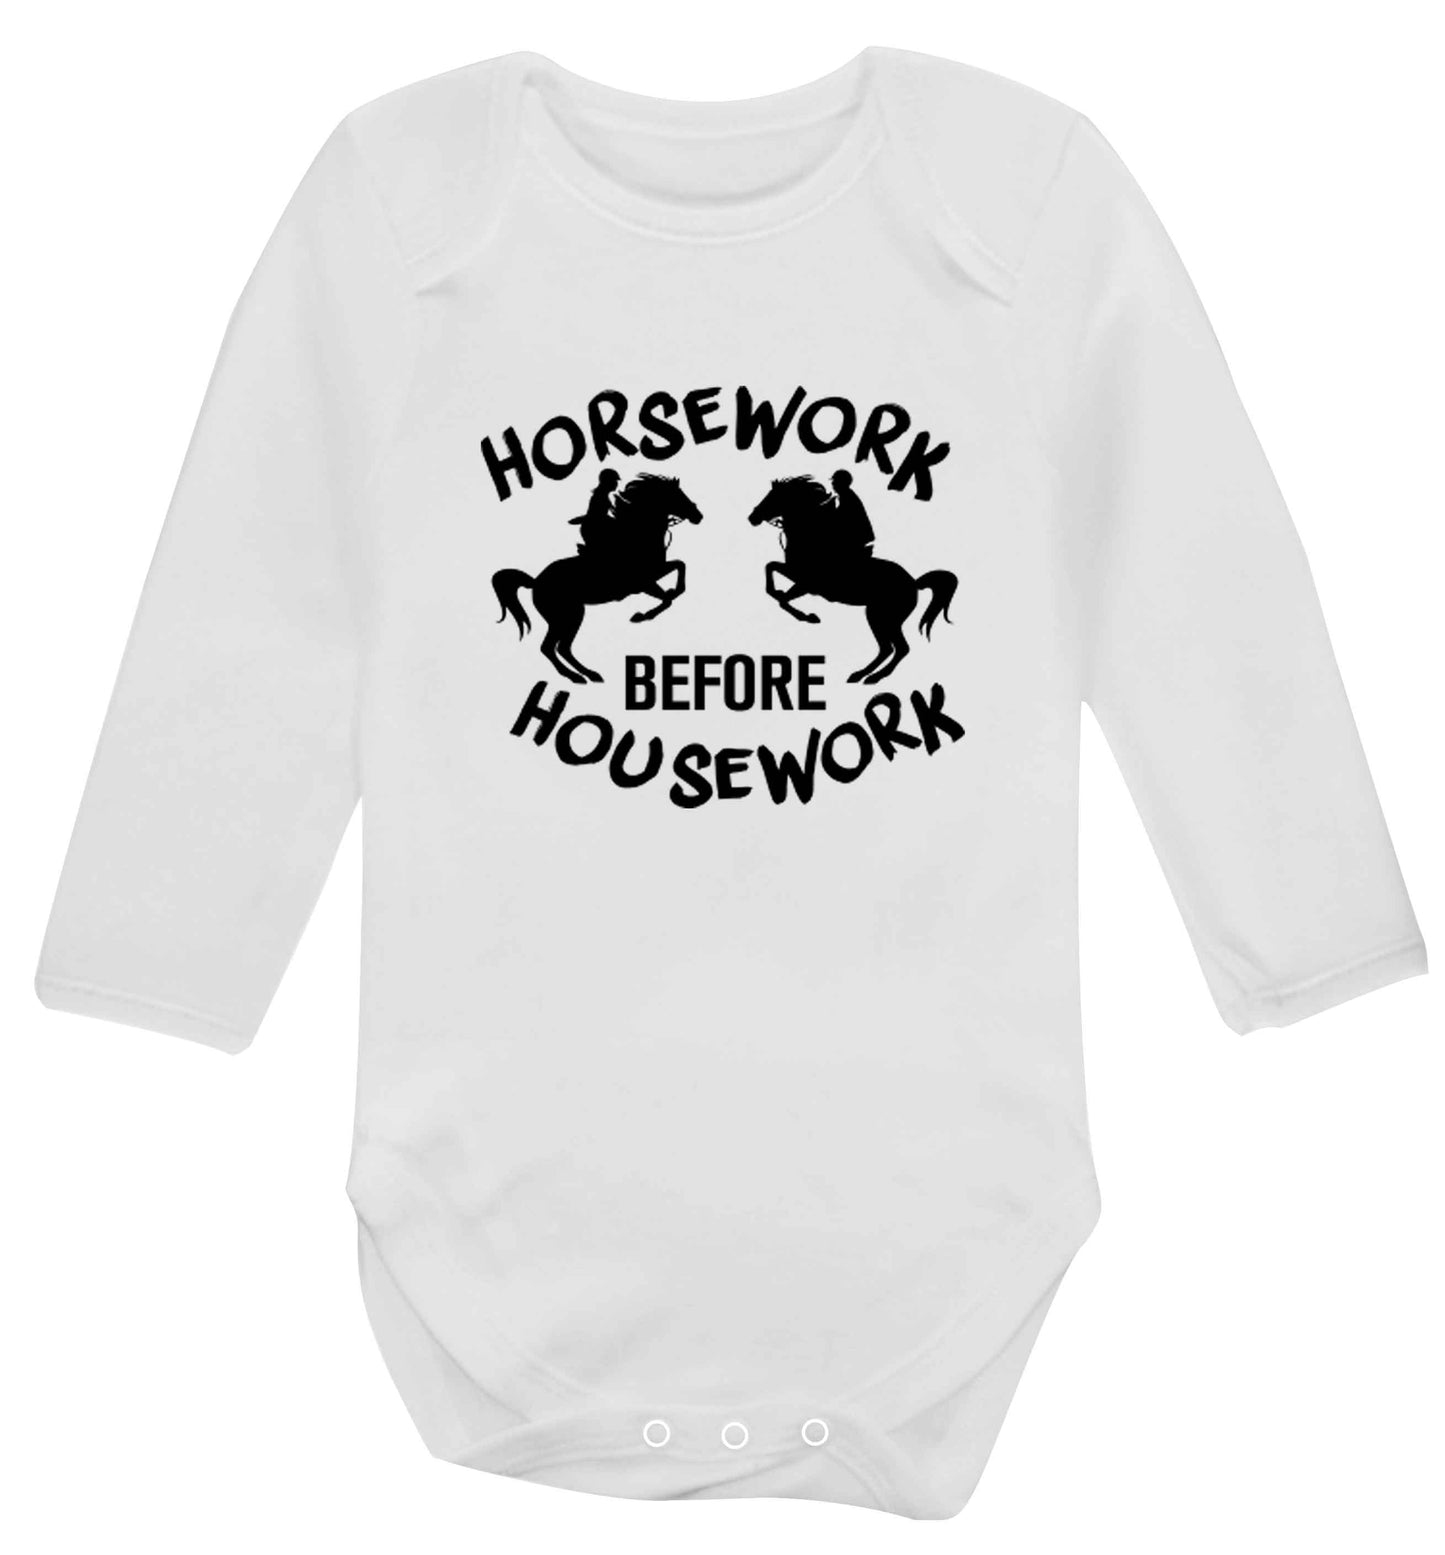 Horsework before housework baby vest long sleeved white 6-12 months